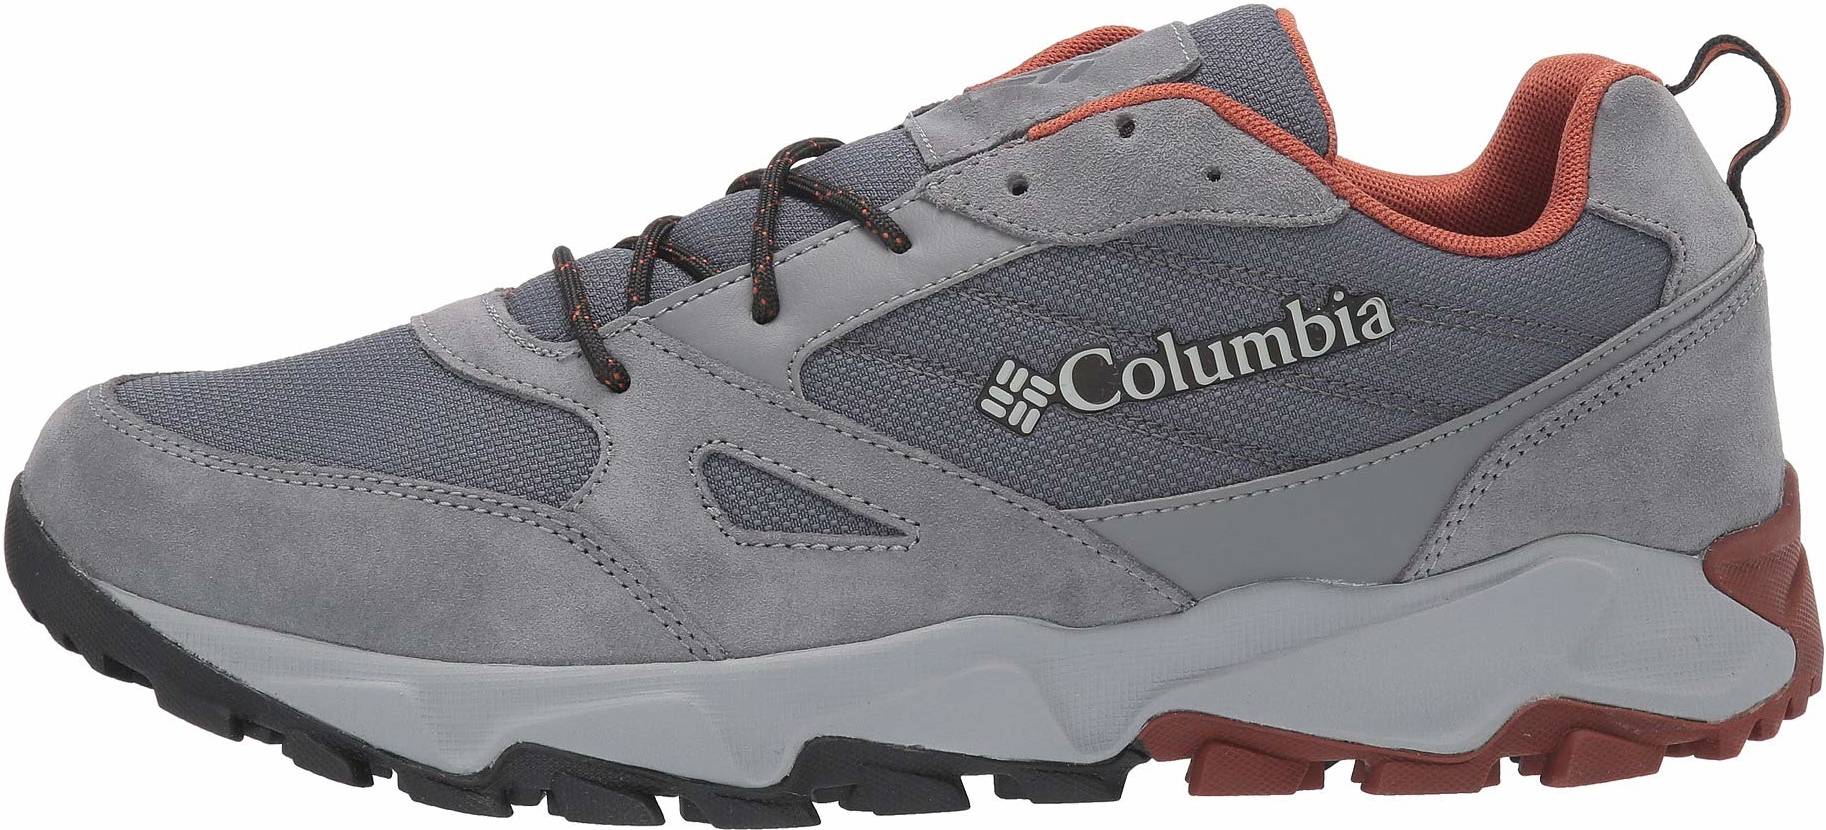 Columbia Men/'s Ivo Trail Wp Walking Shoe